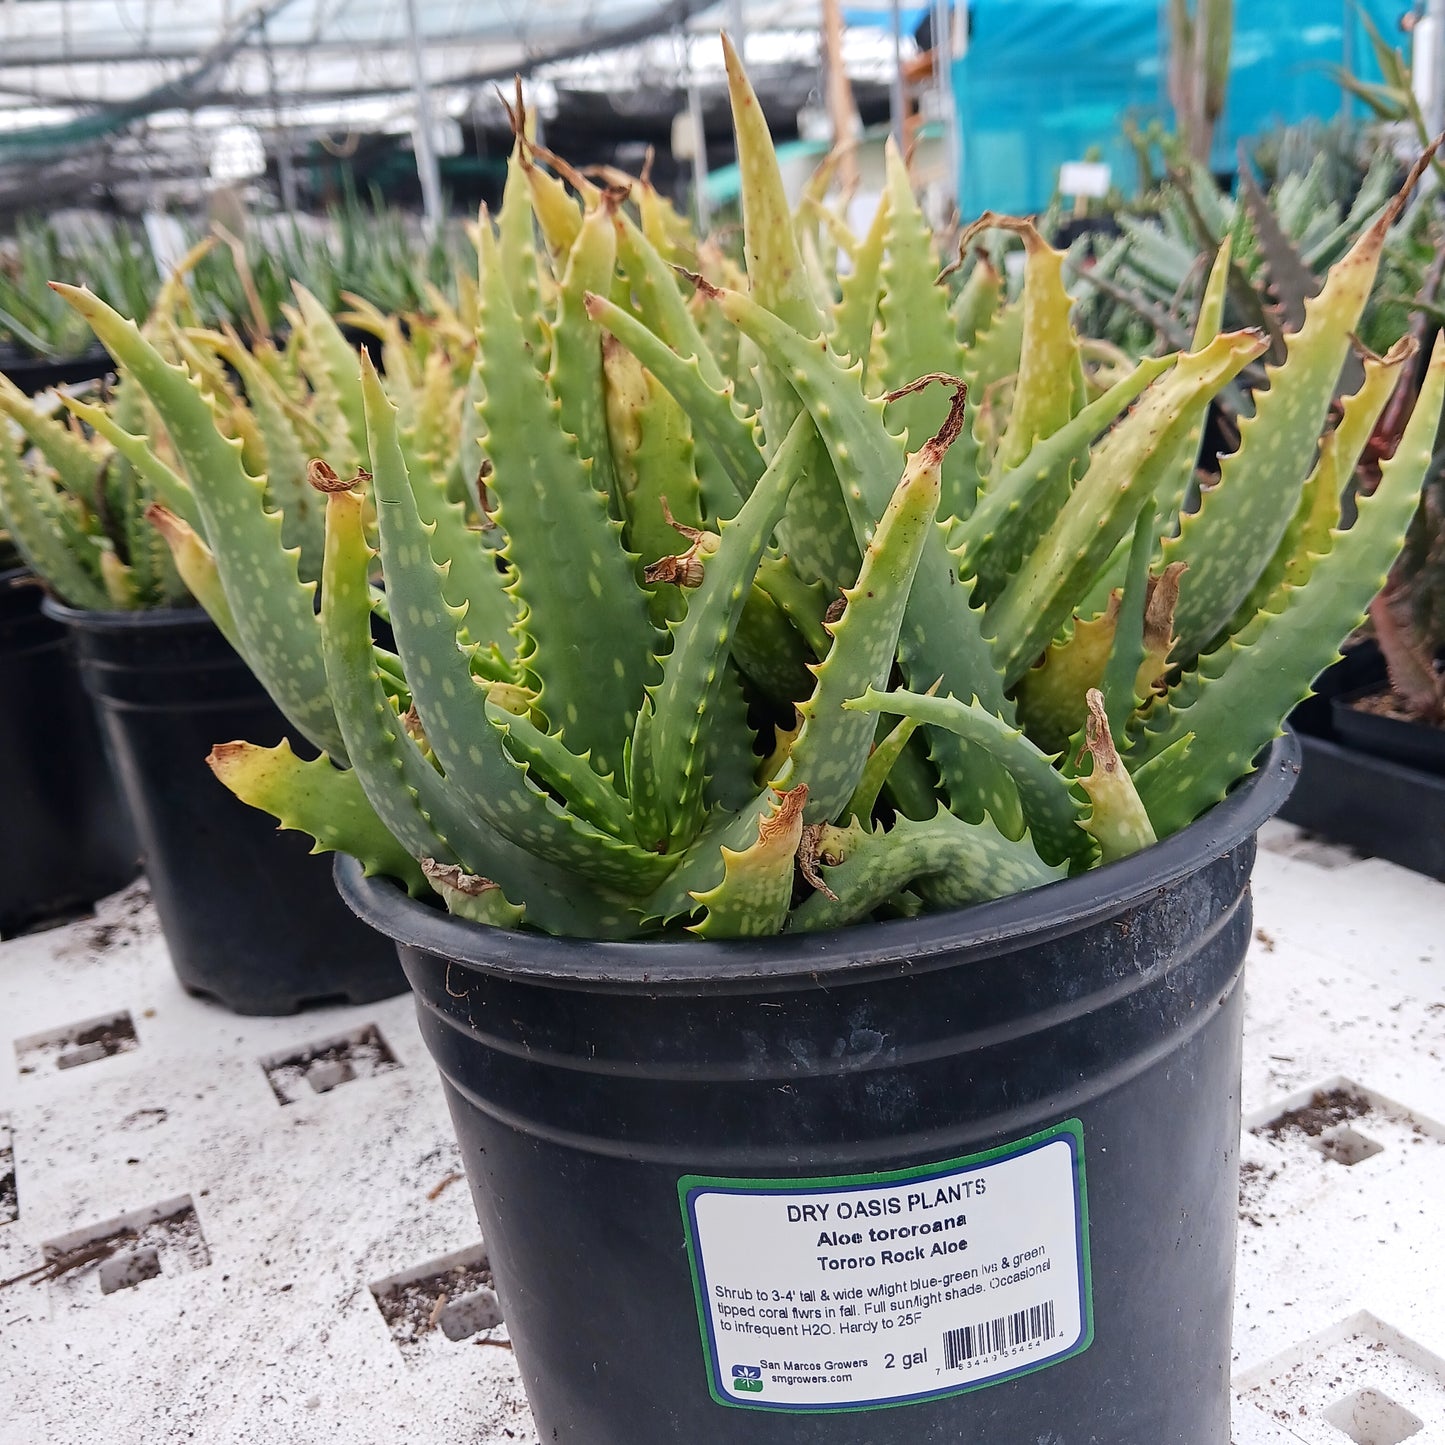 Aloe tororoana in 2ga nursery pot